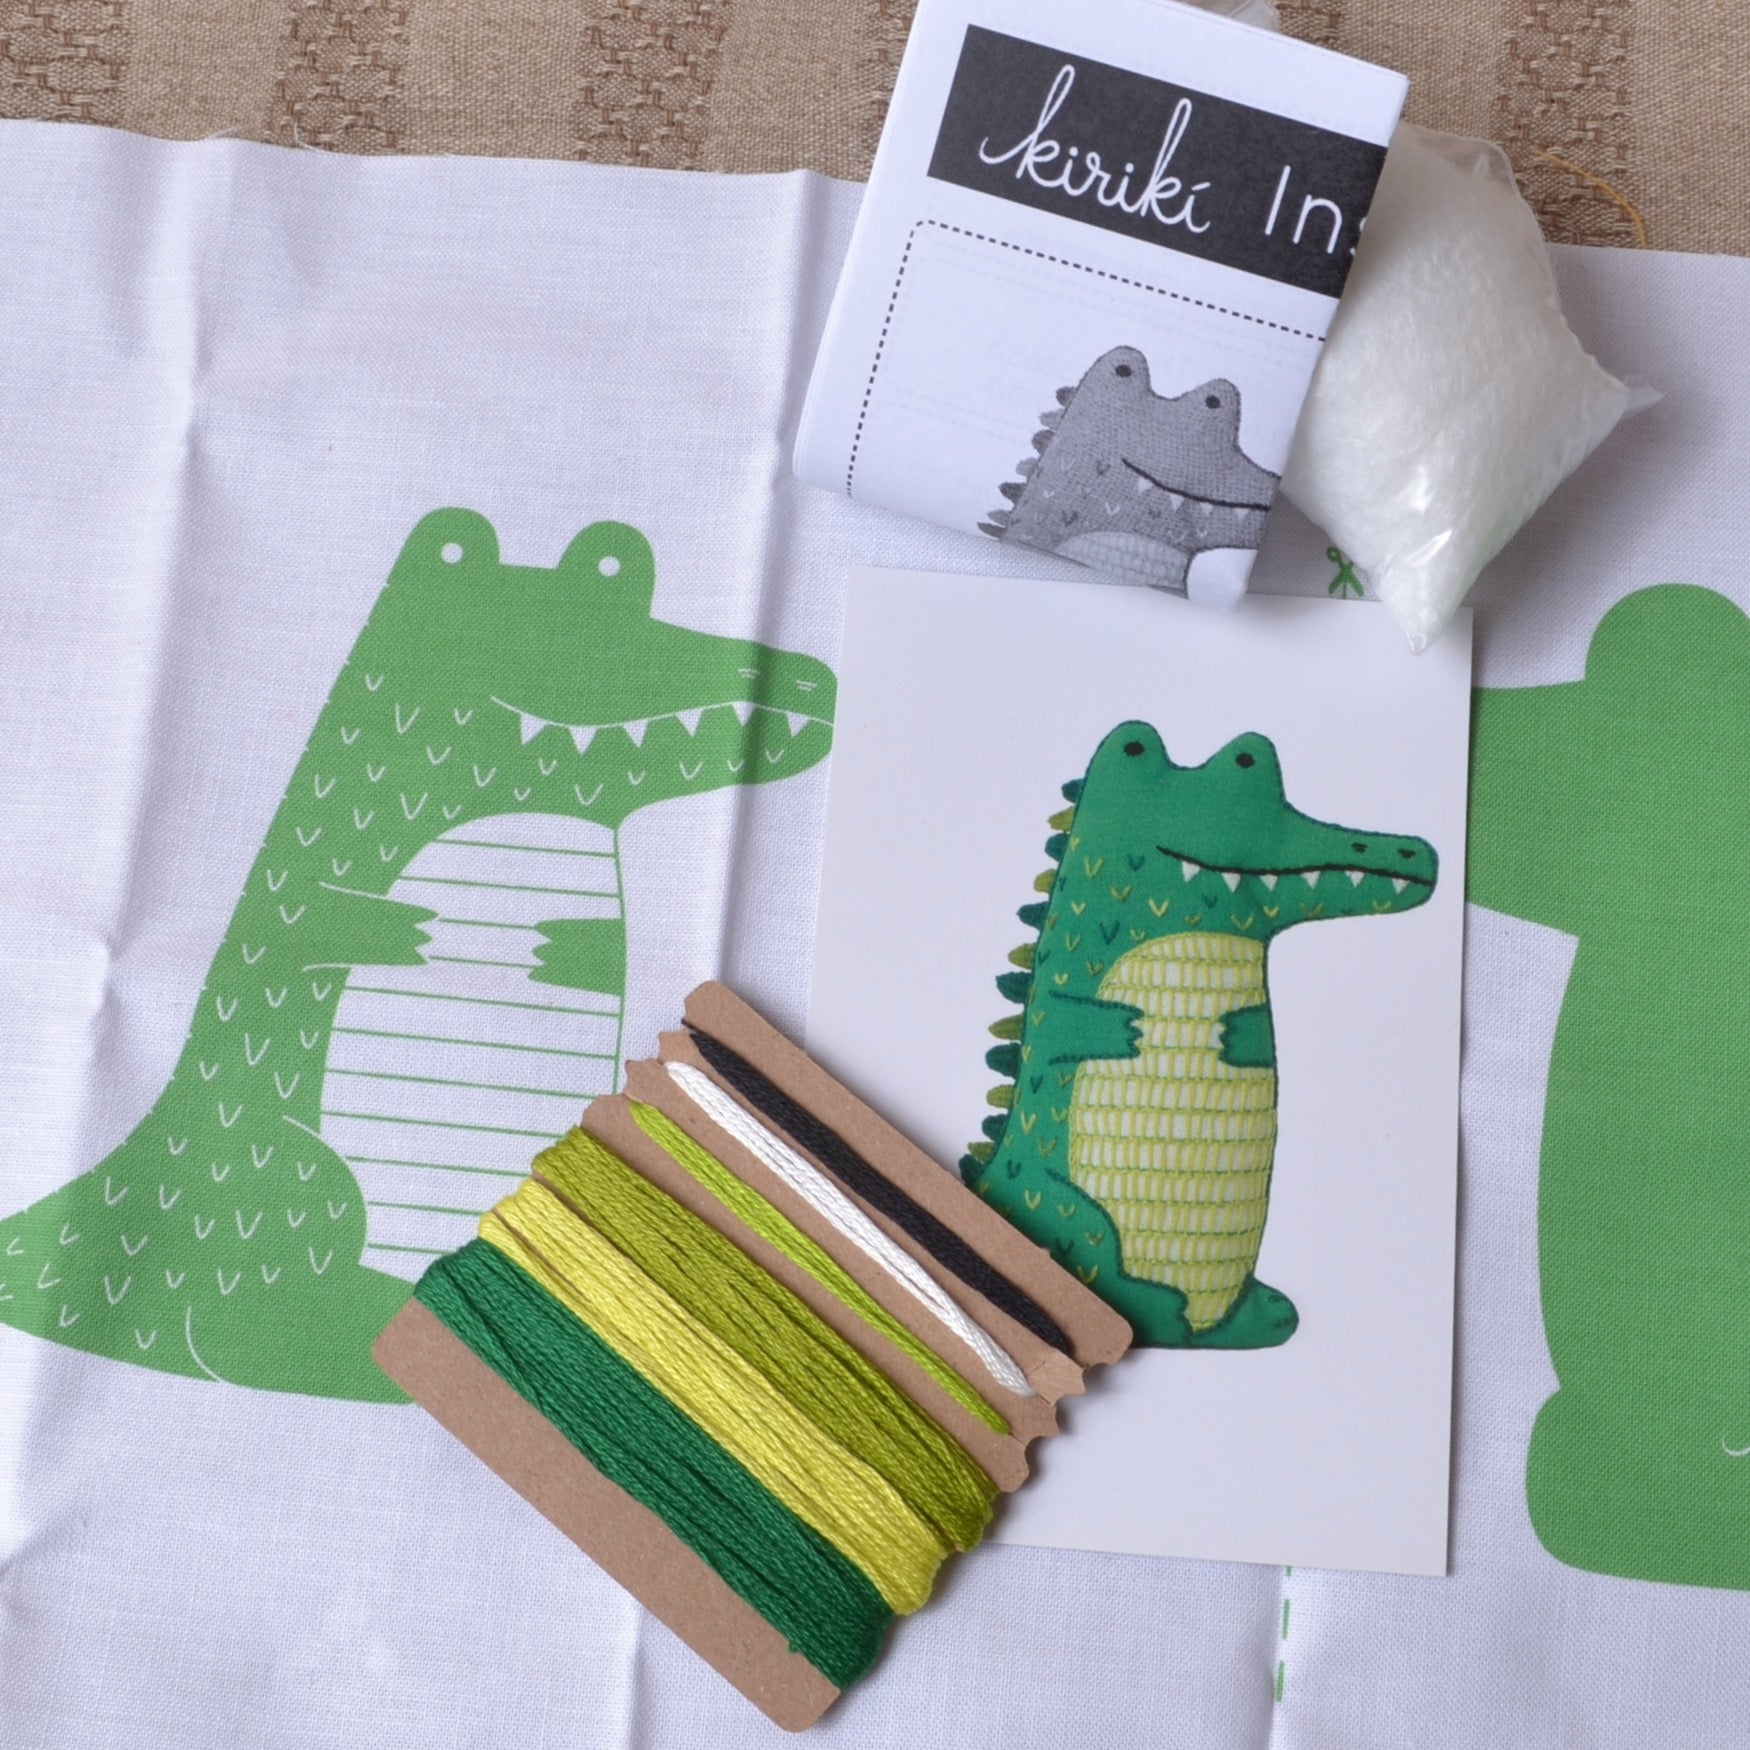 alligator embroidery  kit by Kiriki